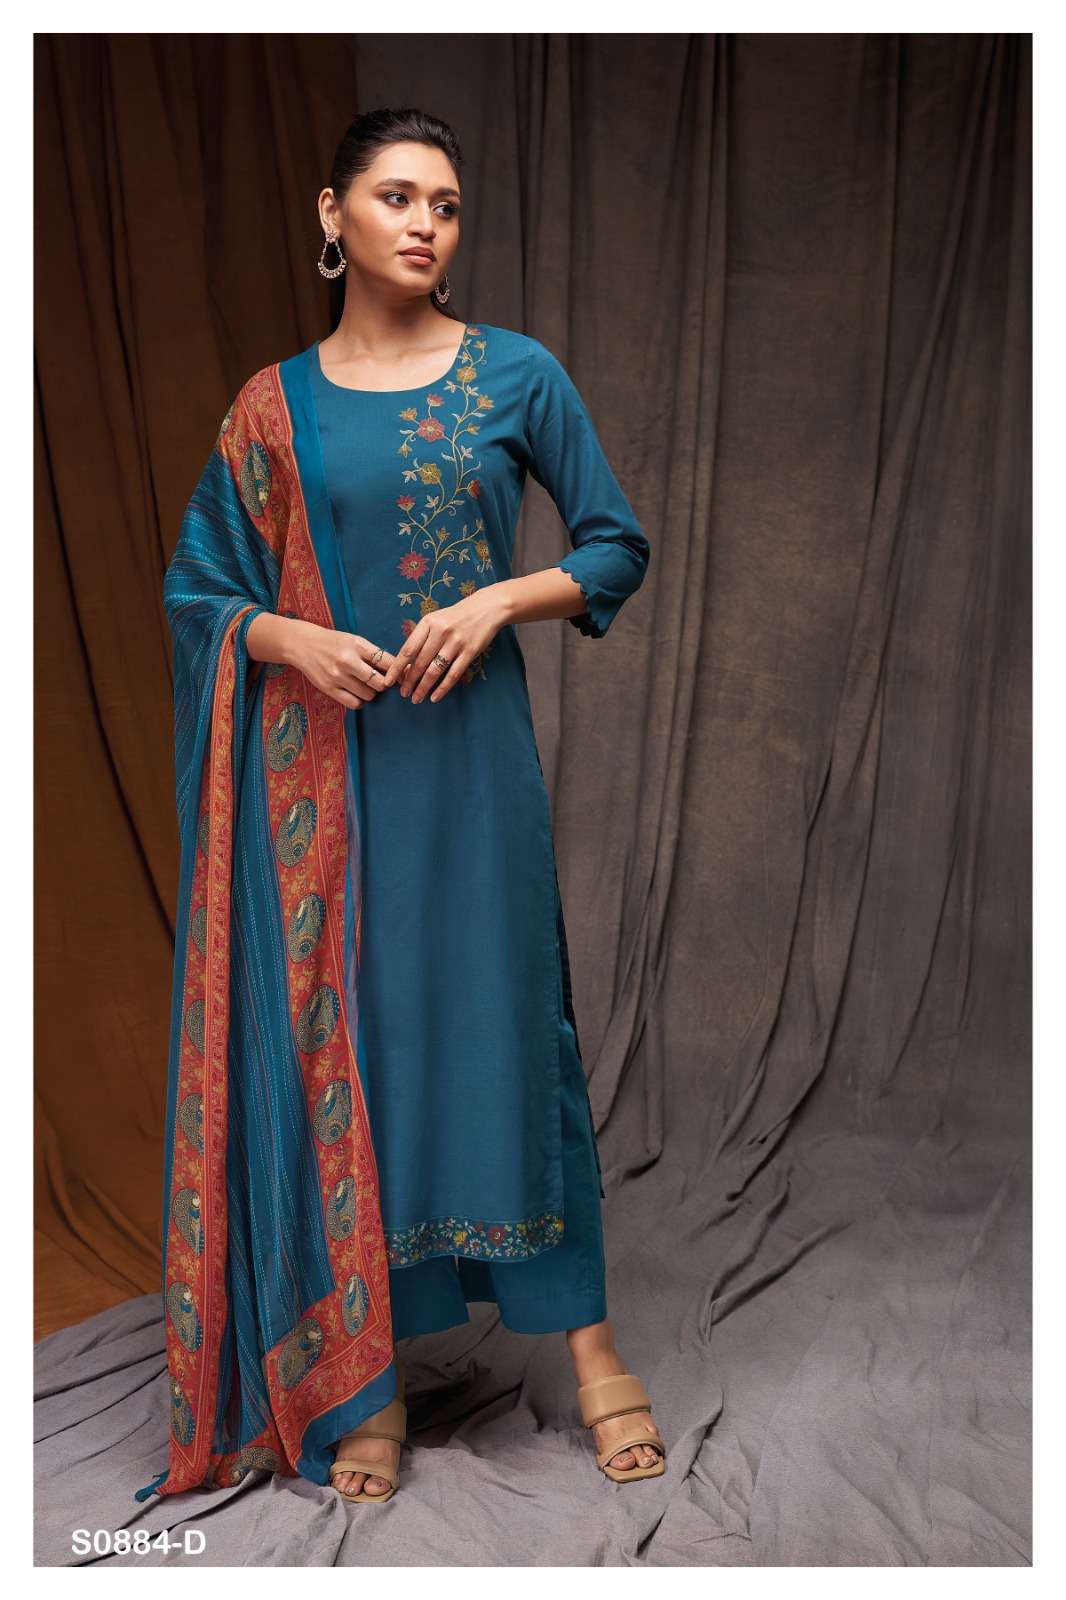 ganga nazaria 884 series stylish designer salwar kameez catalogue online price surat